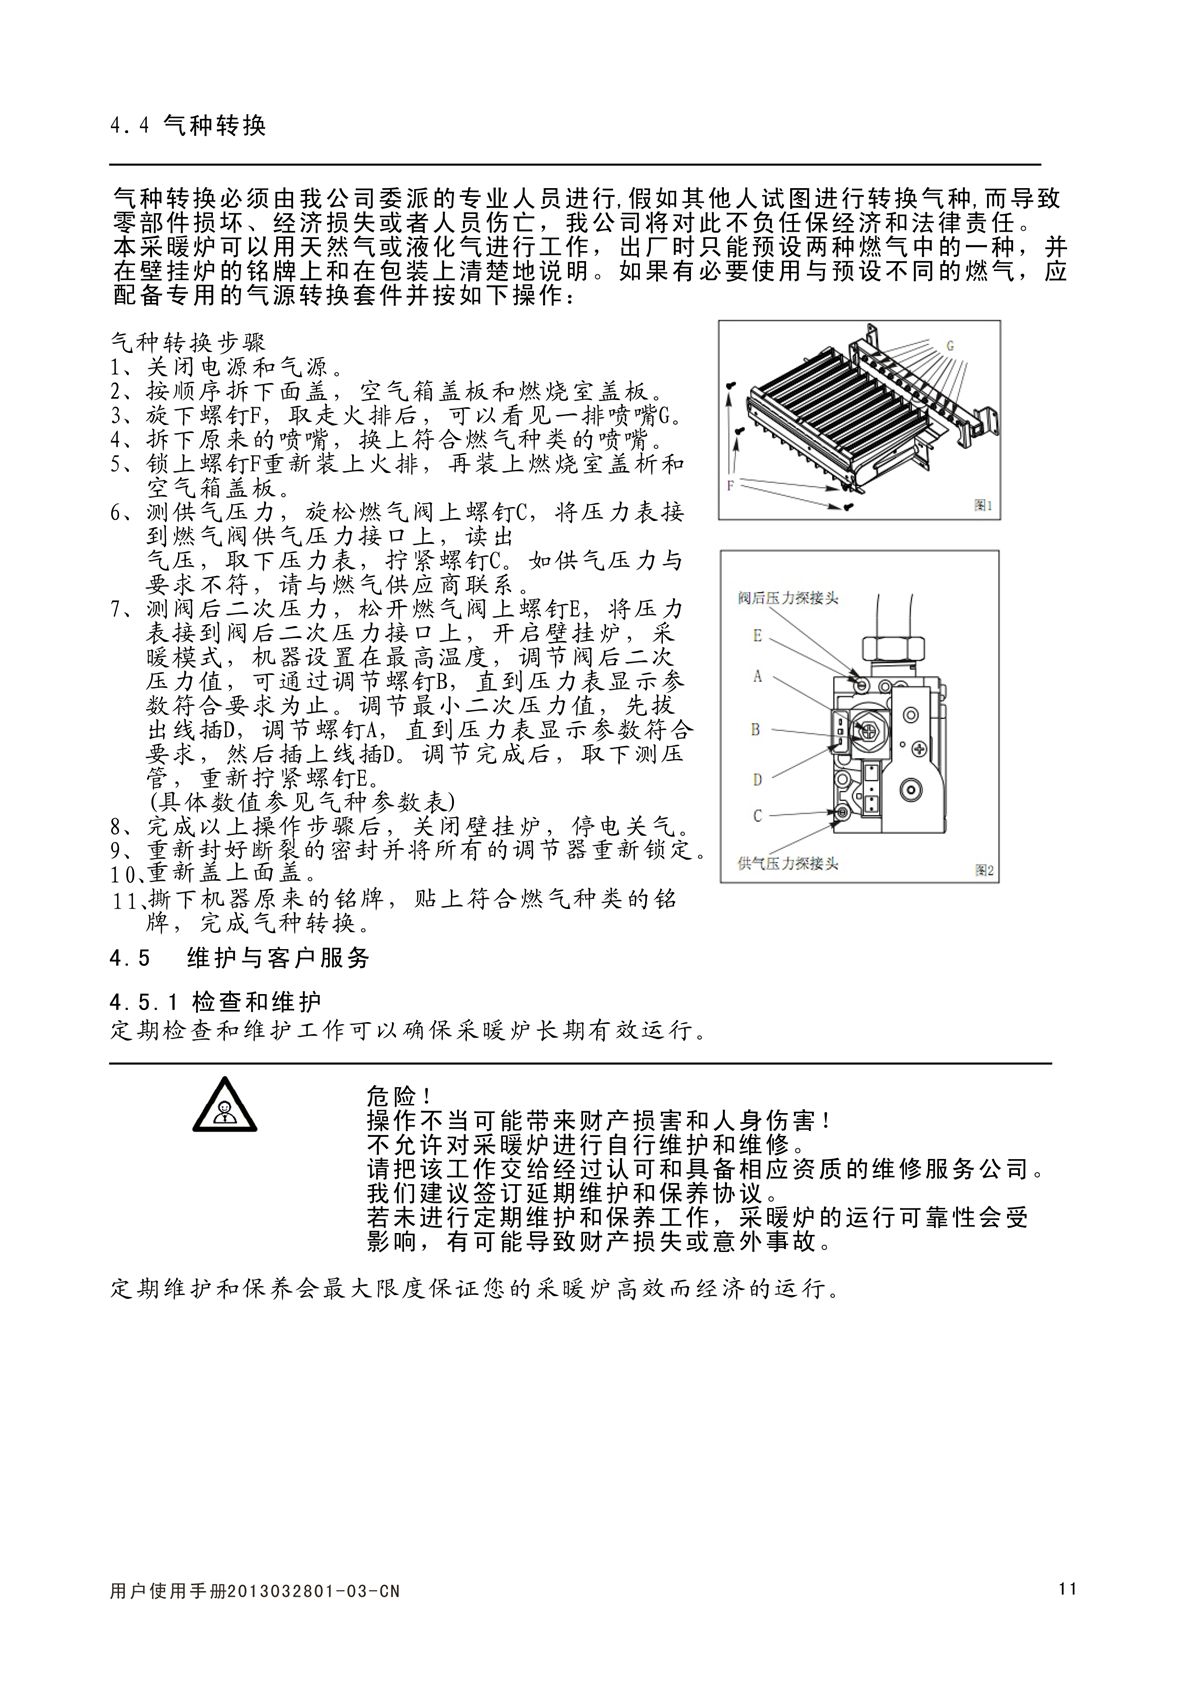 ES16C系列-用户使用手册-7_02.jpg